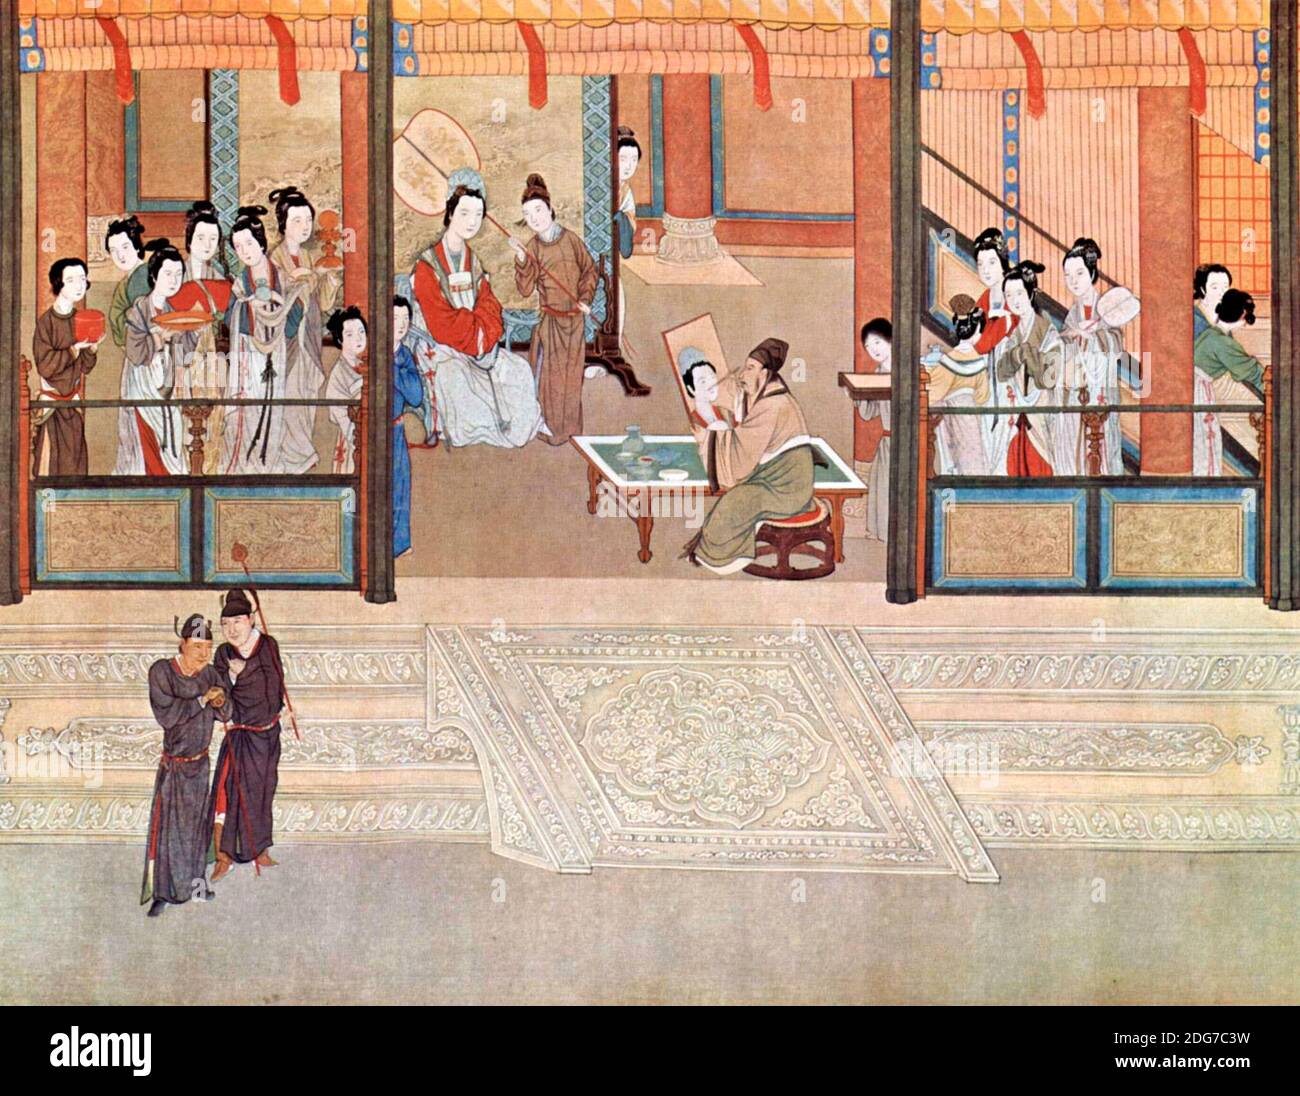 Spring morning in the Han Palace - Han Gong Chun Xiao - Ming Dynasty, China Stock Photo